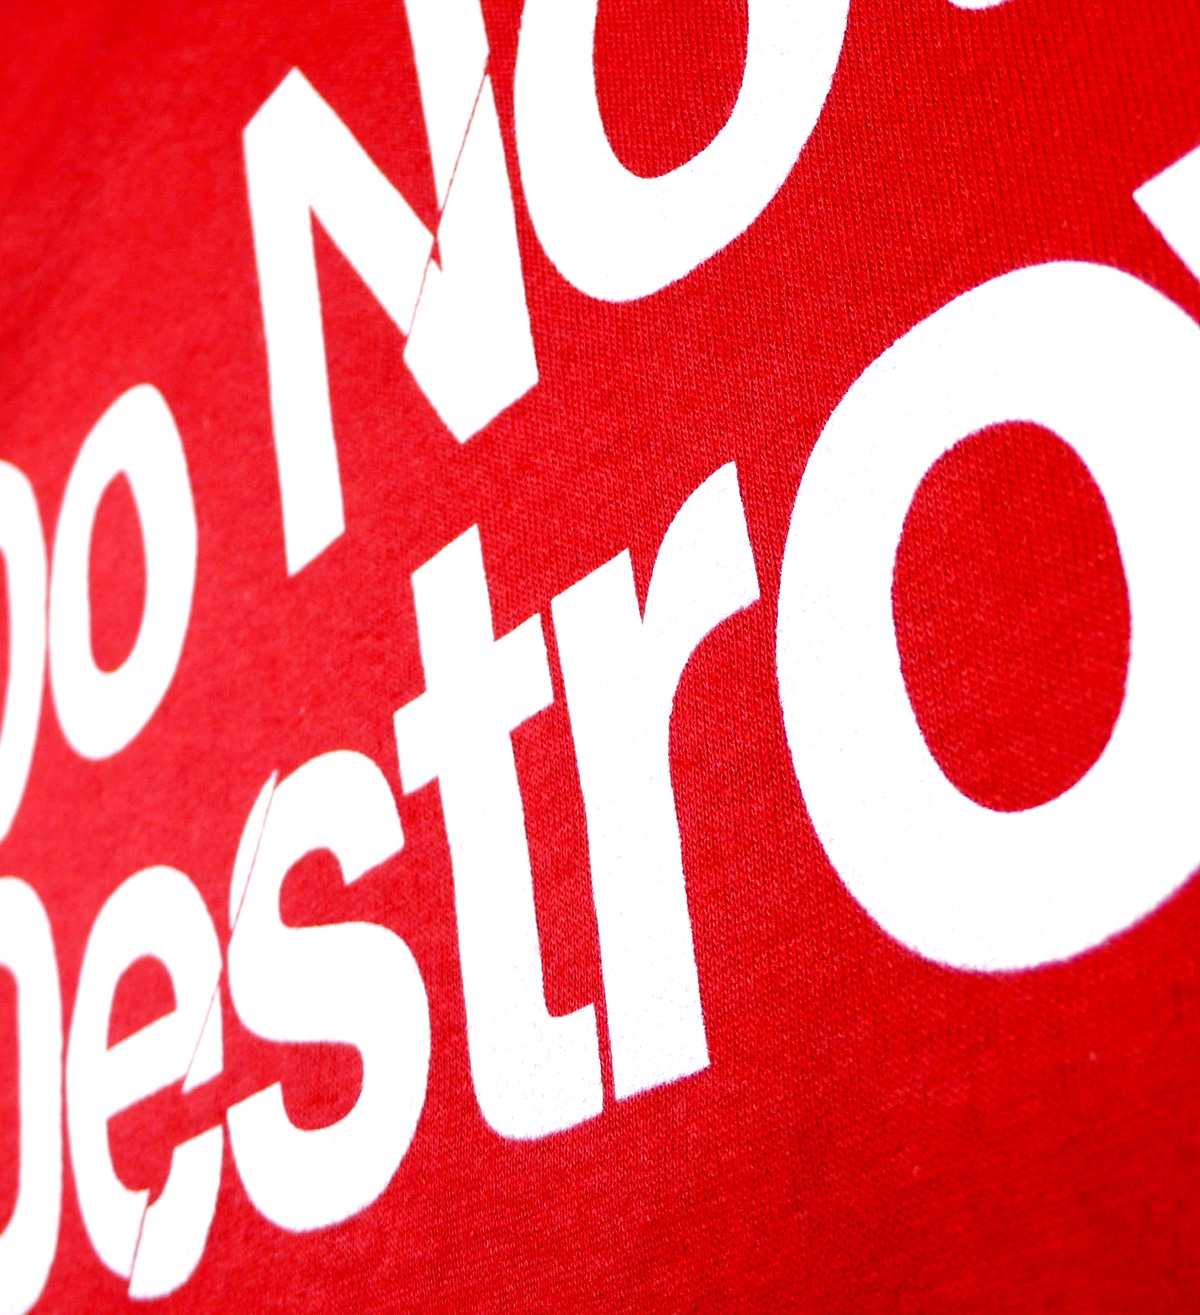 Do Not Destroy Red t-shirt tee